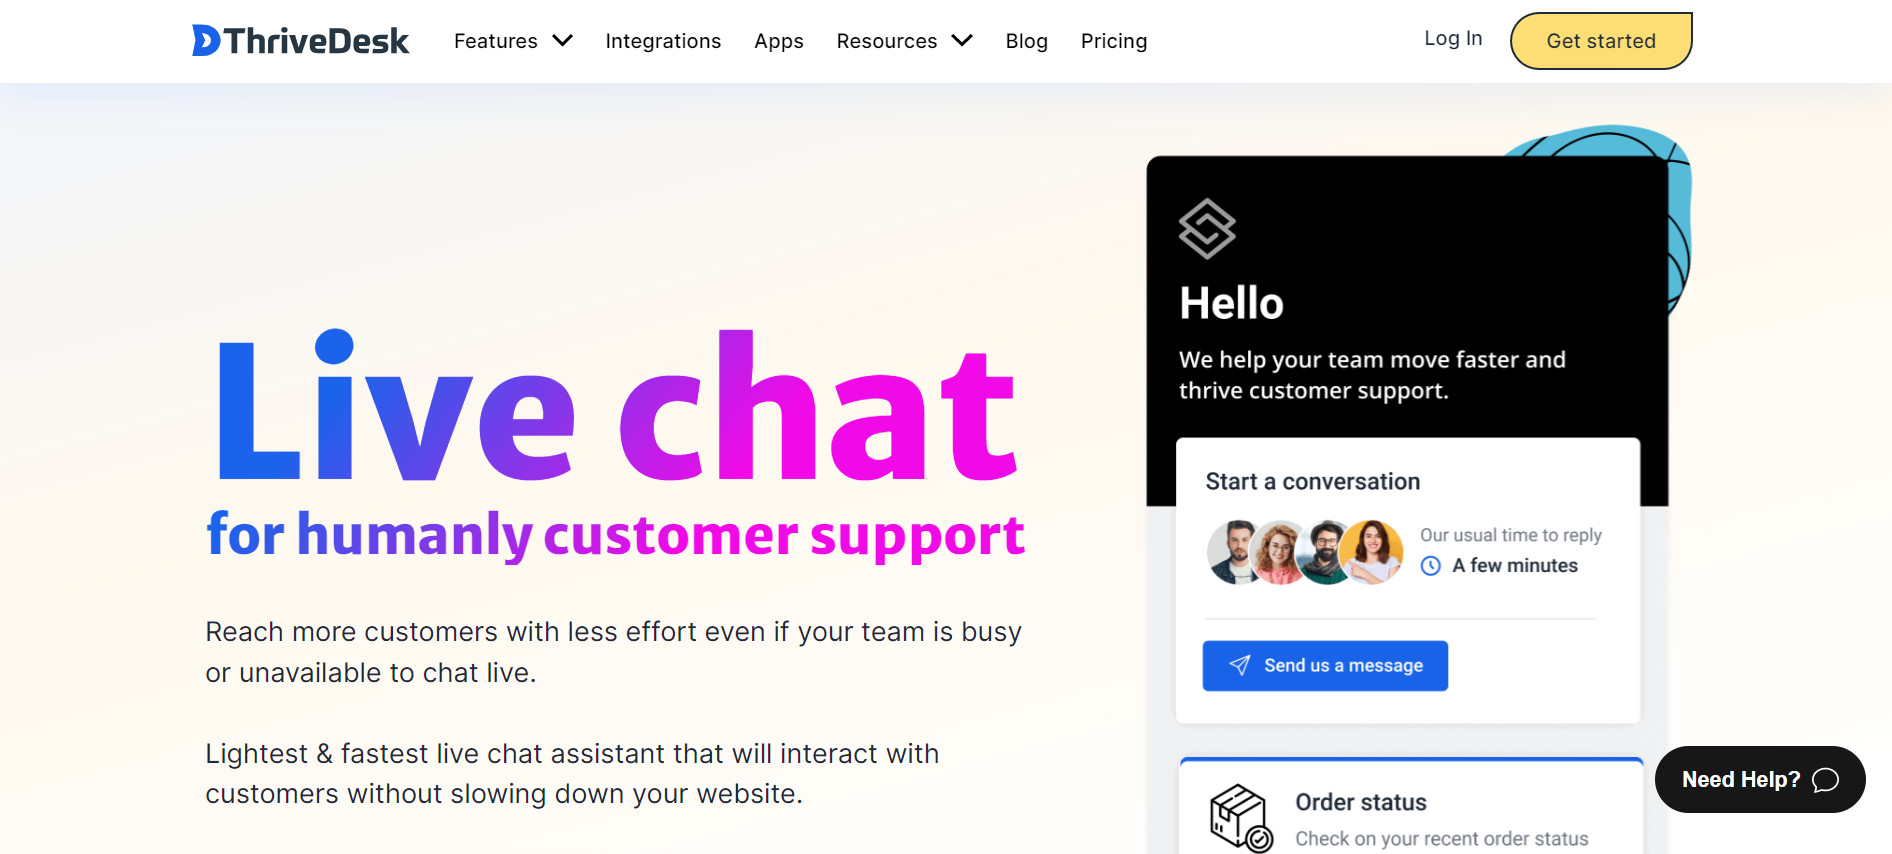 Chat platform